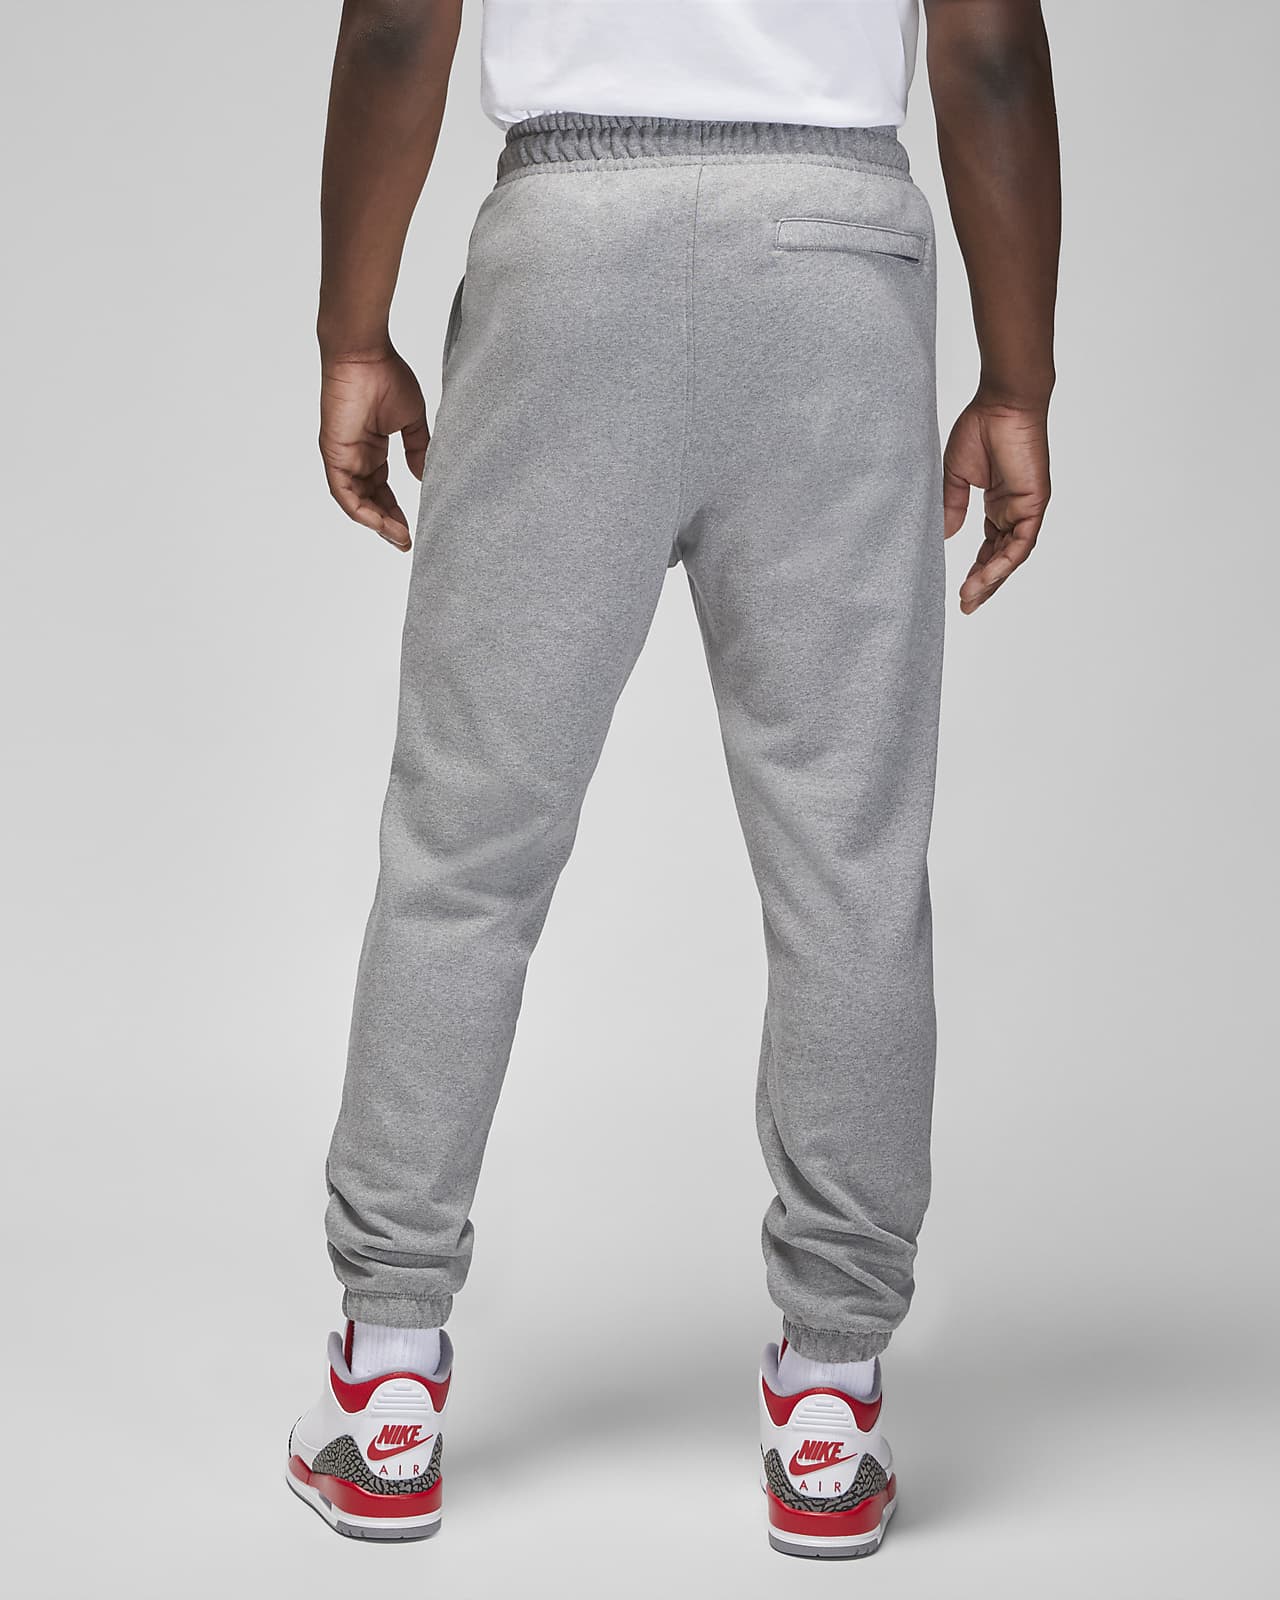 Jeans & Pants, Air Jordan Nike Black Sweatpants Men's Fleece XXL